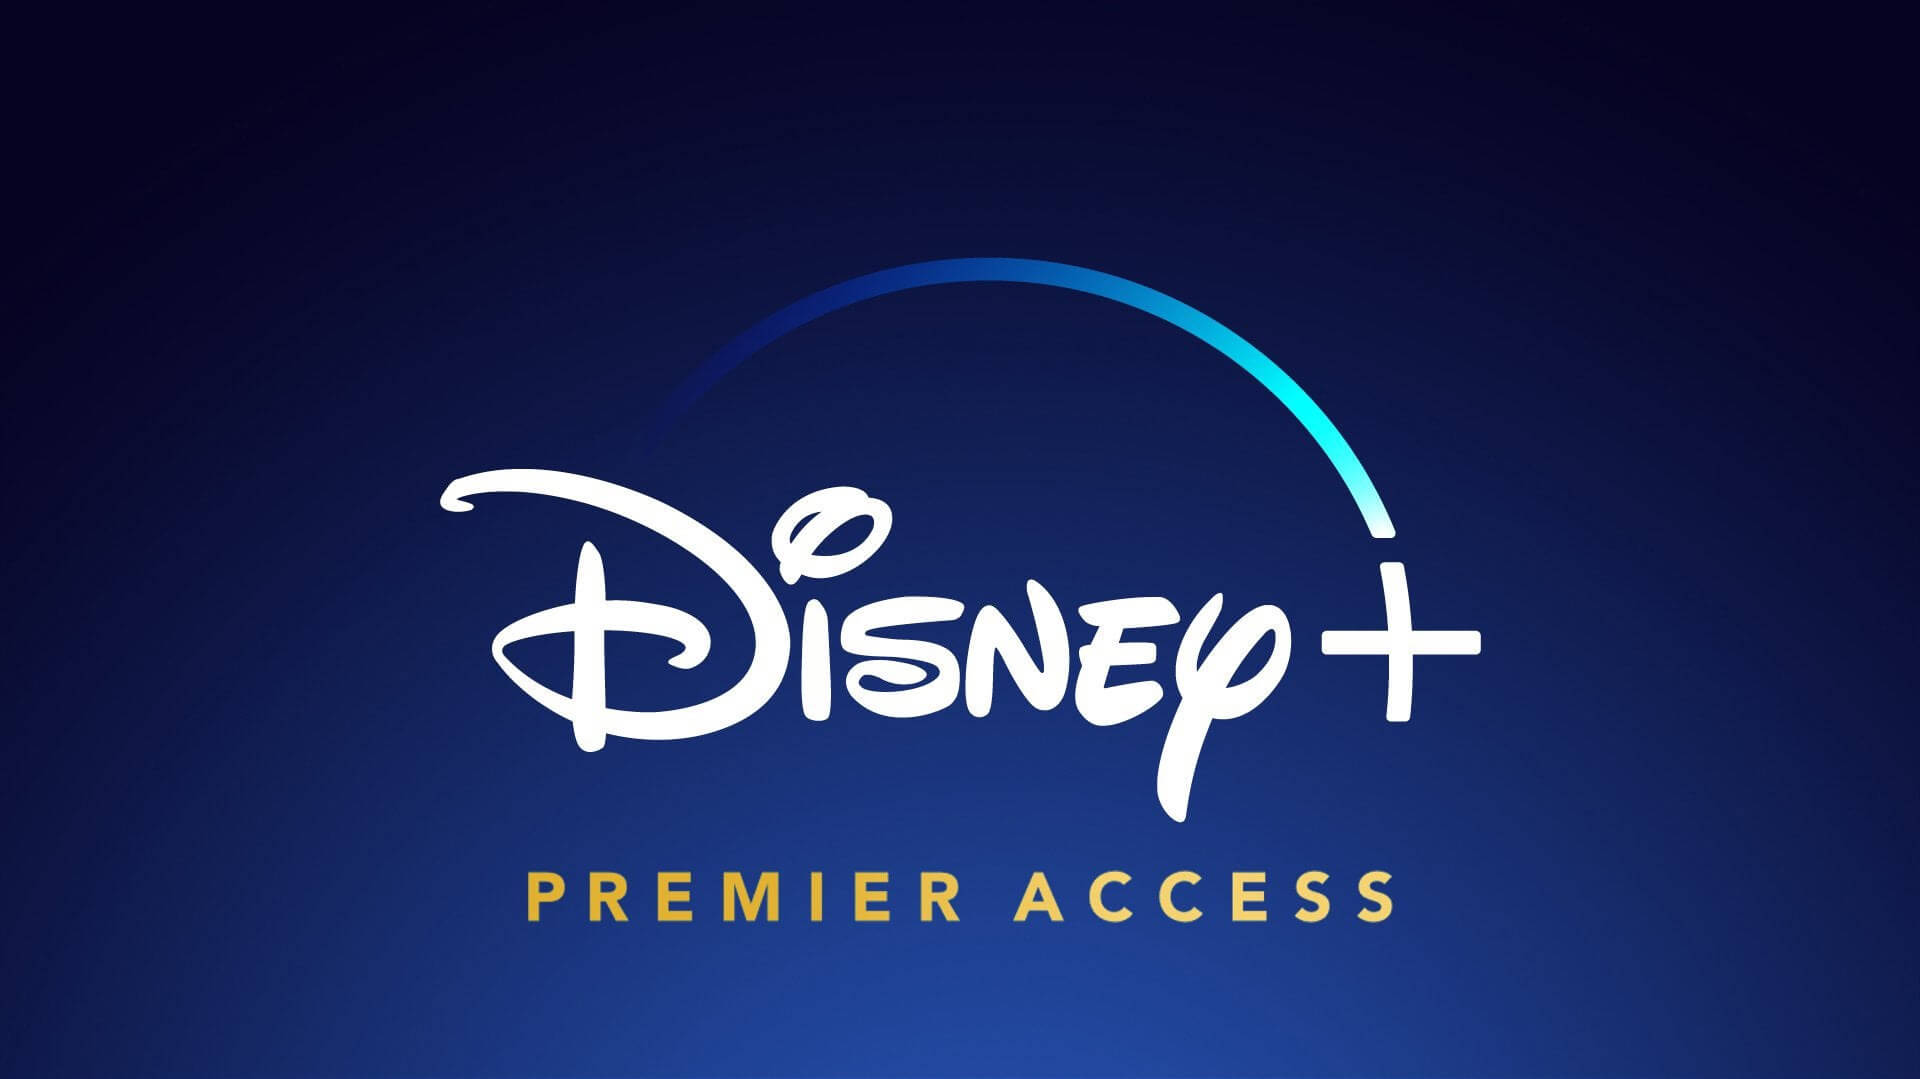 Artemis Fowl Movie to Premiere Exclusively On Disney+